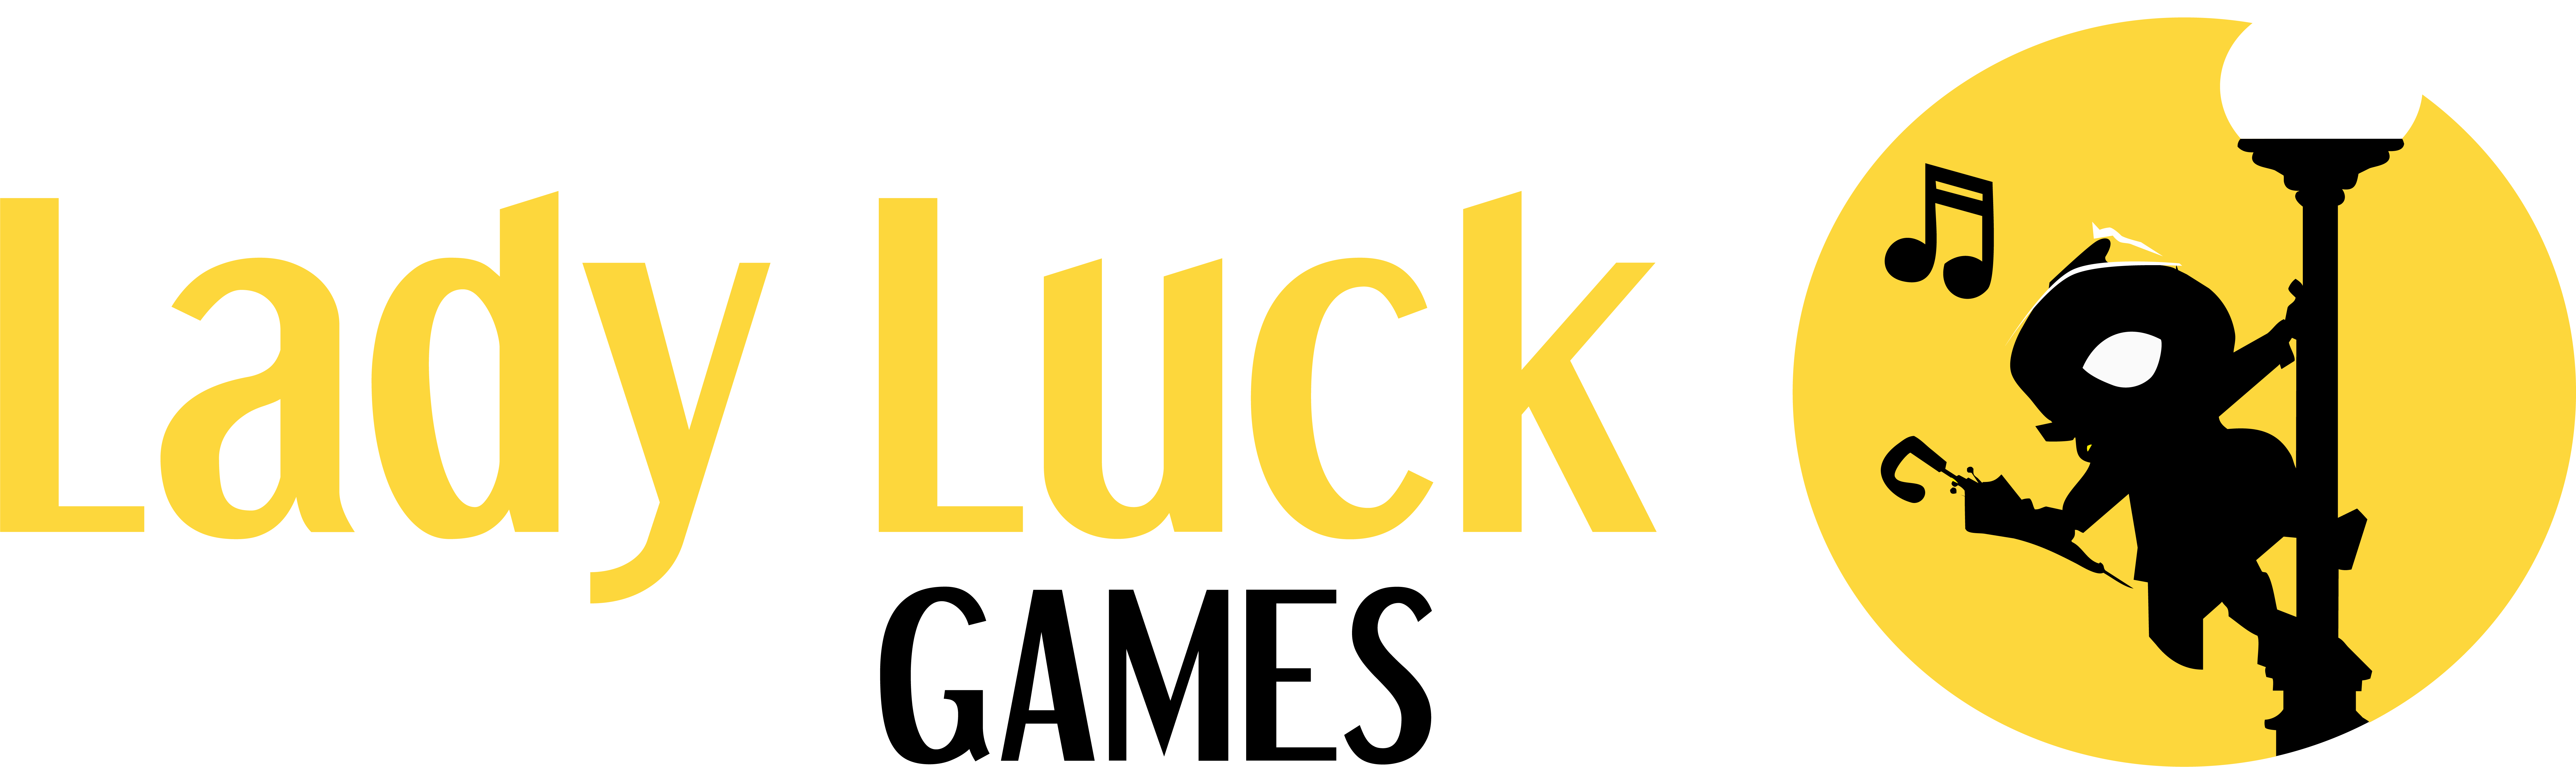 Lady Luck Games jogos